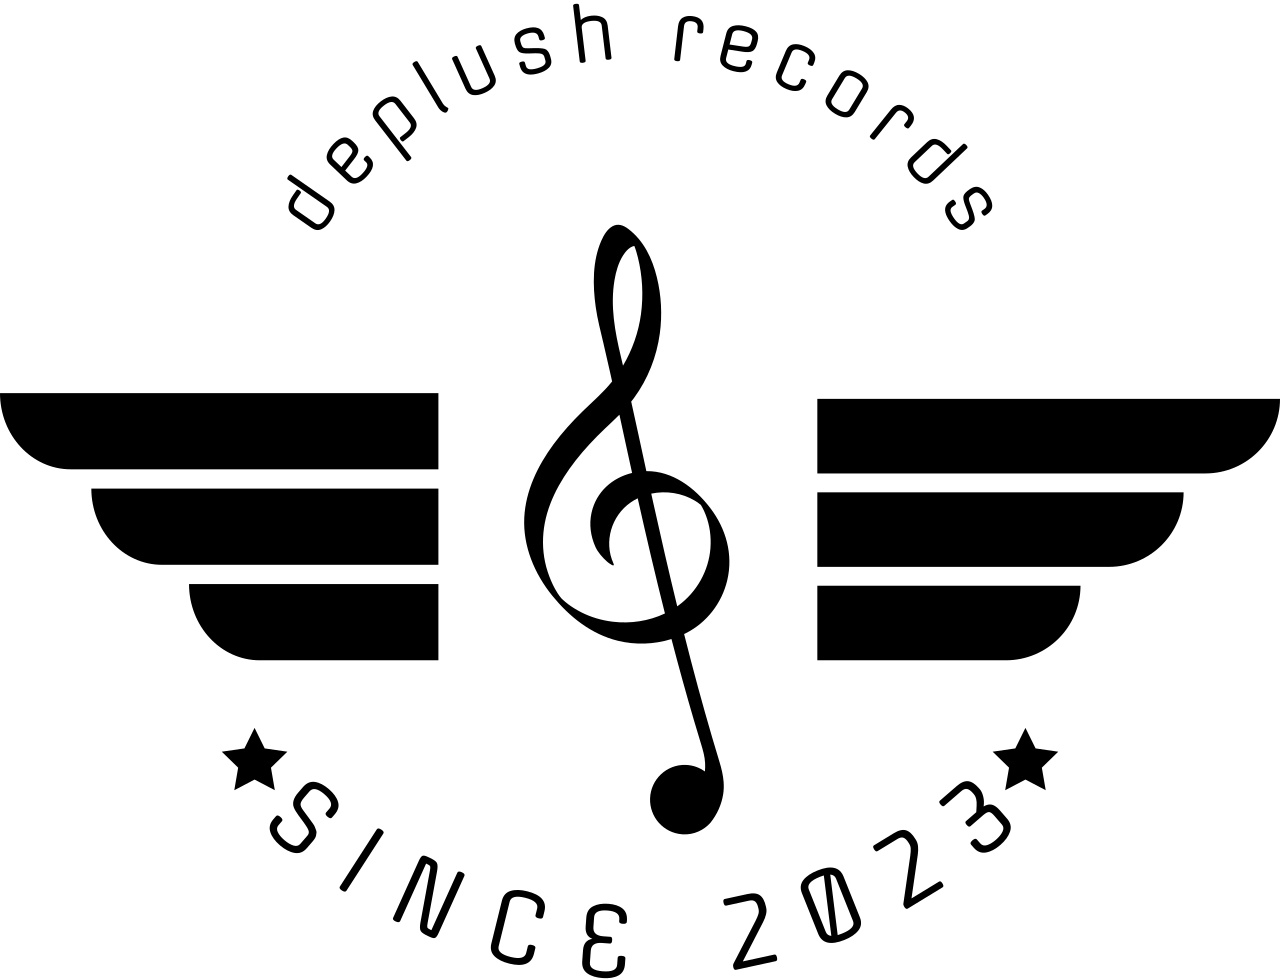 deplush records's logo